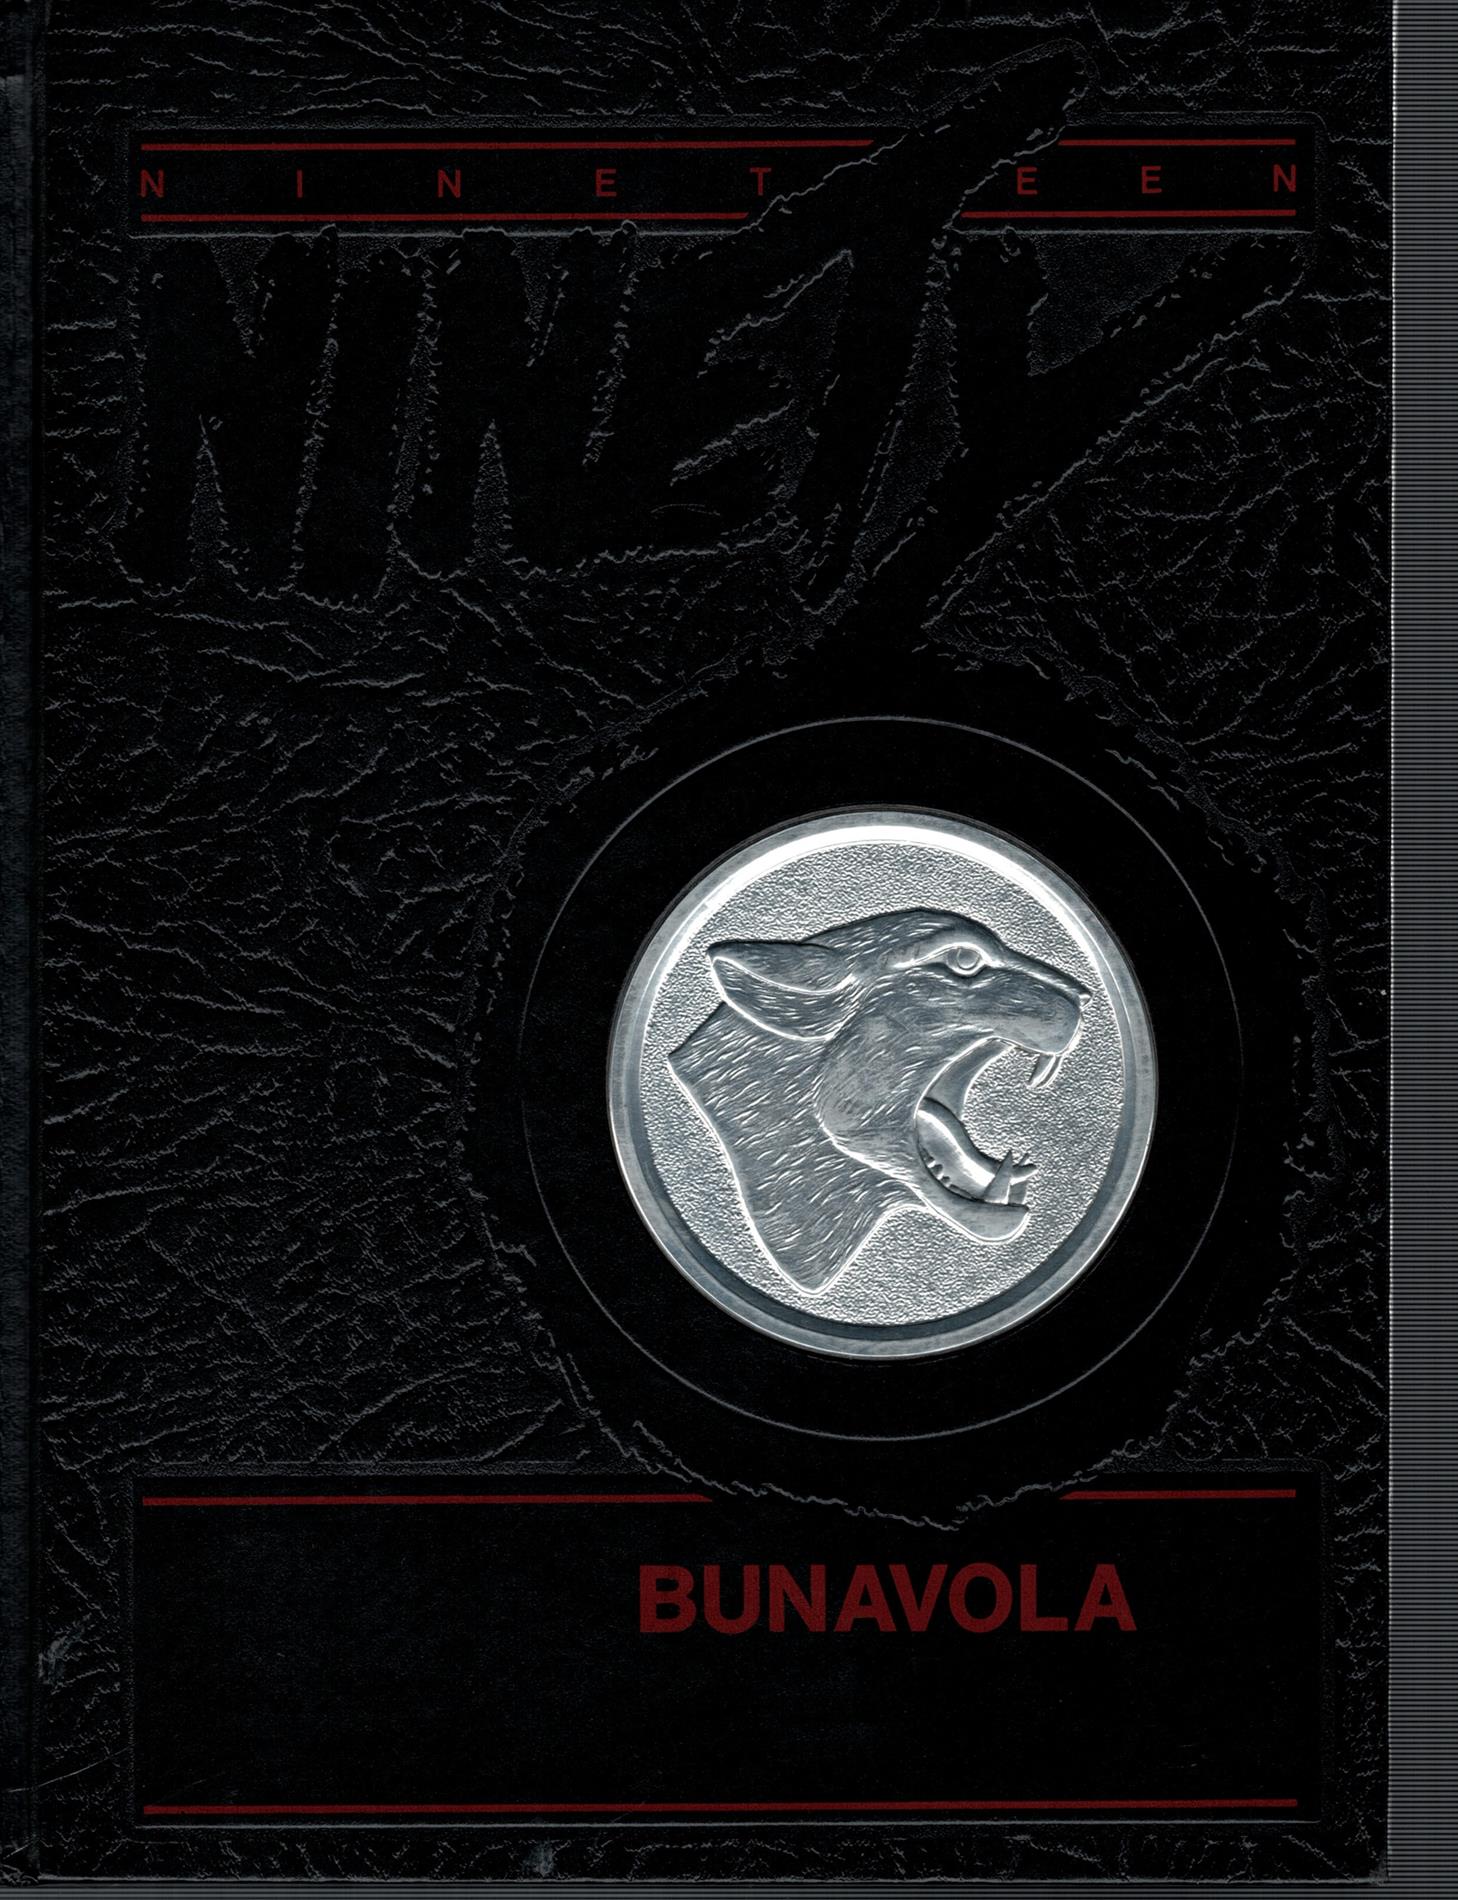 1990 Bunavola